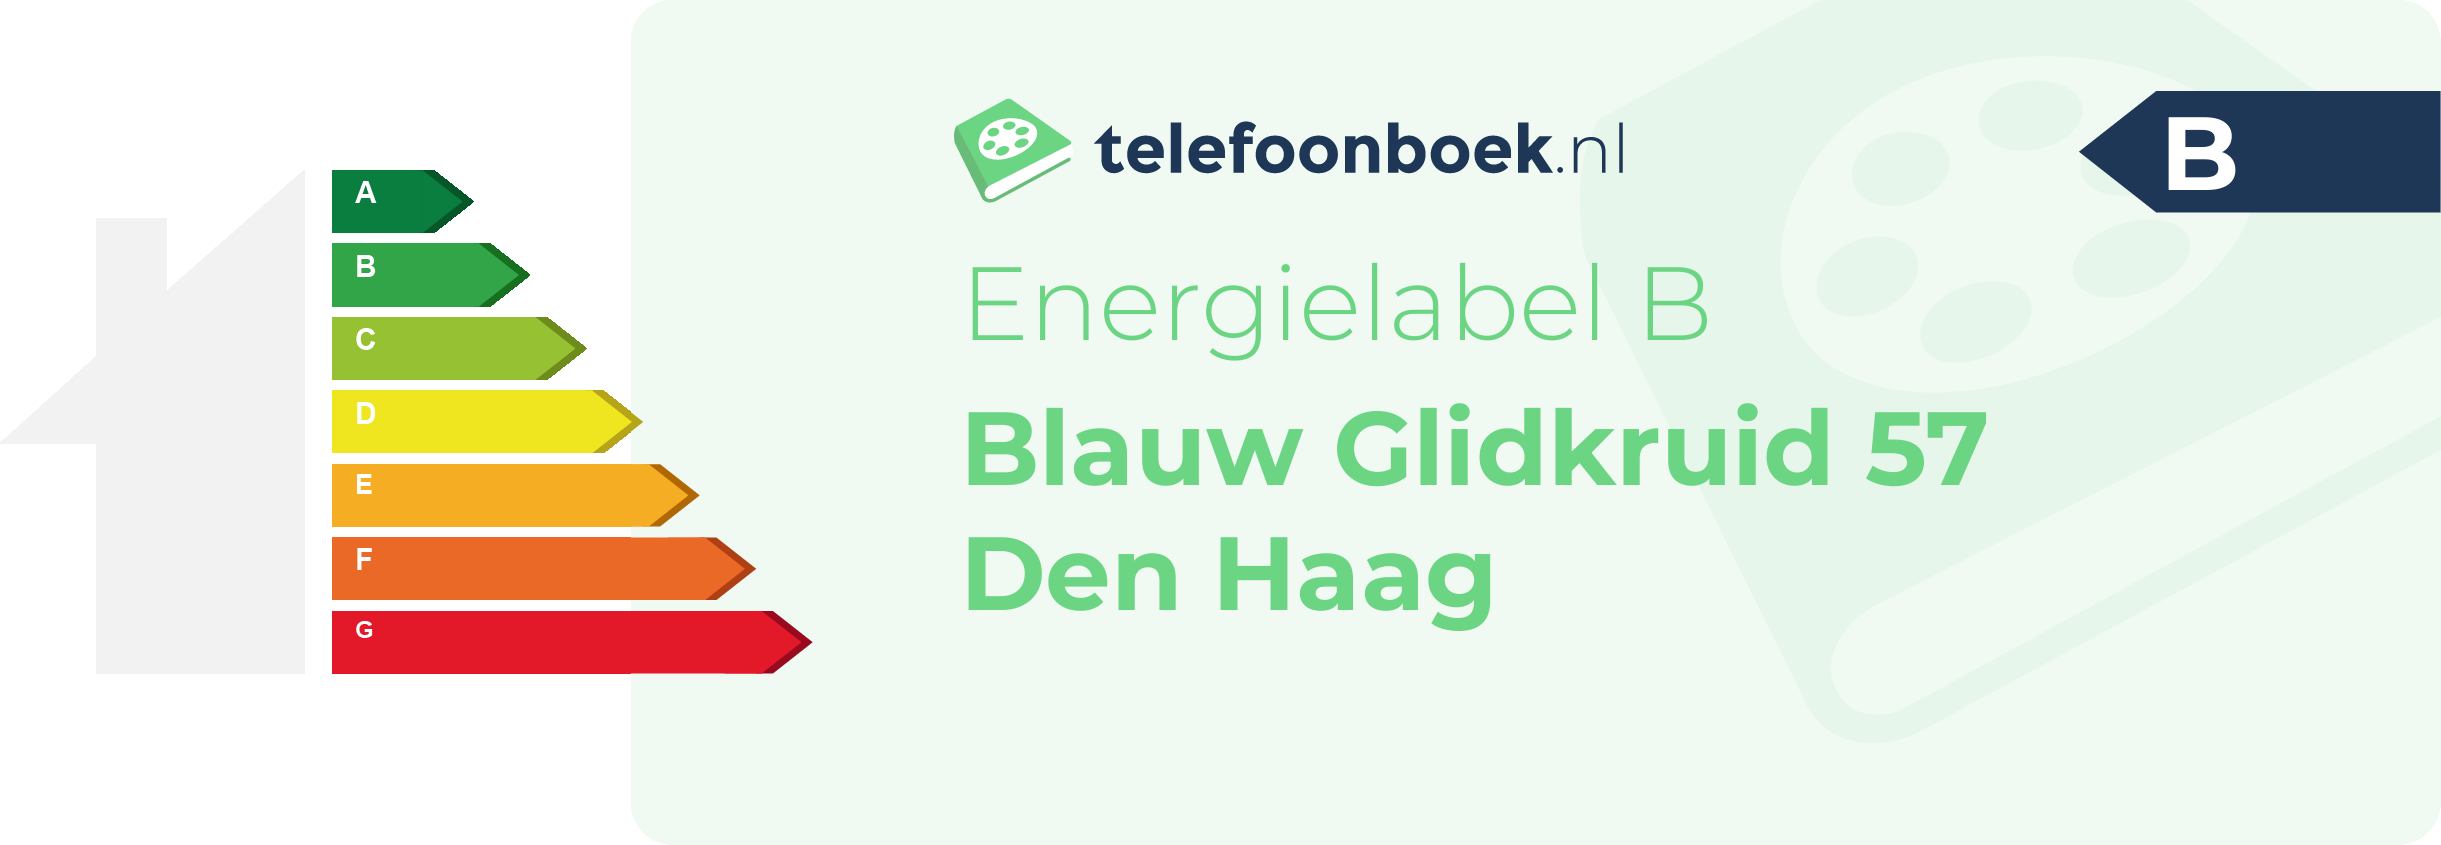 Energielabel Blauw Glidkruid 57 Den Haag